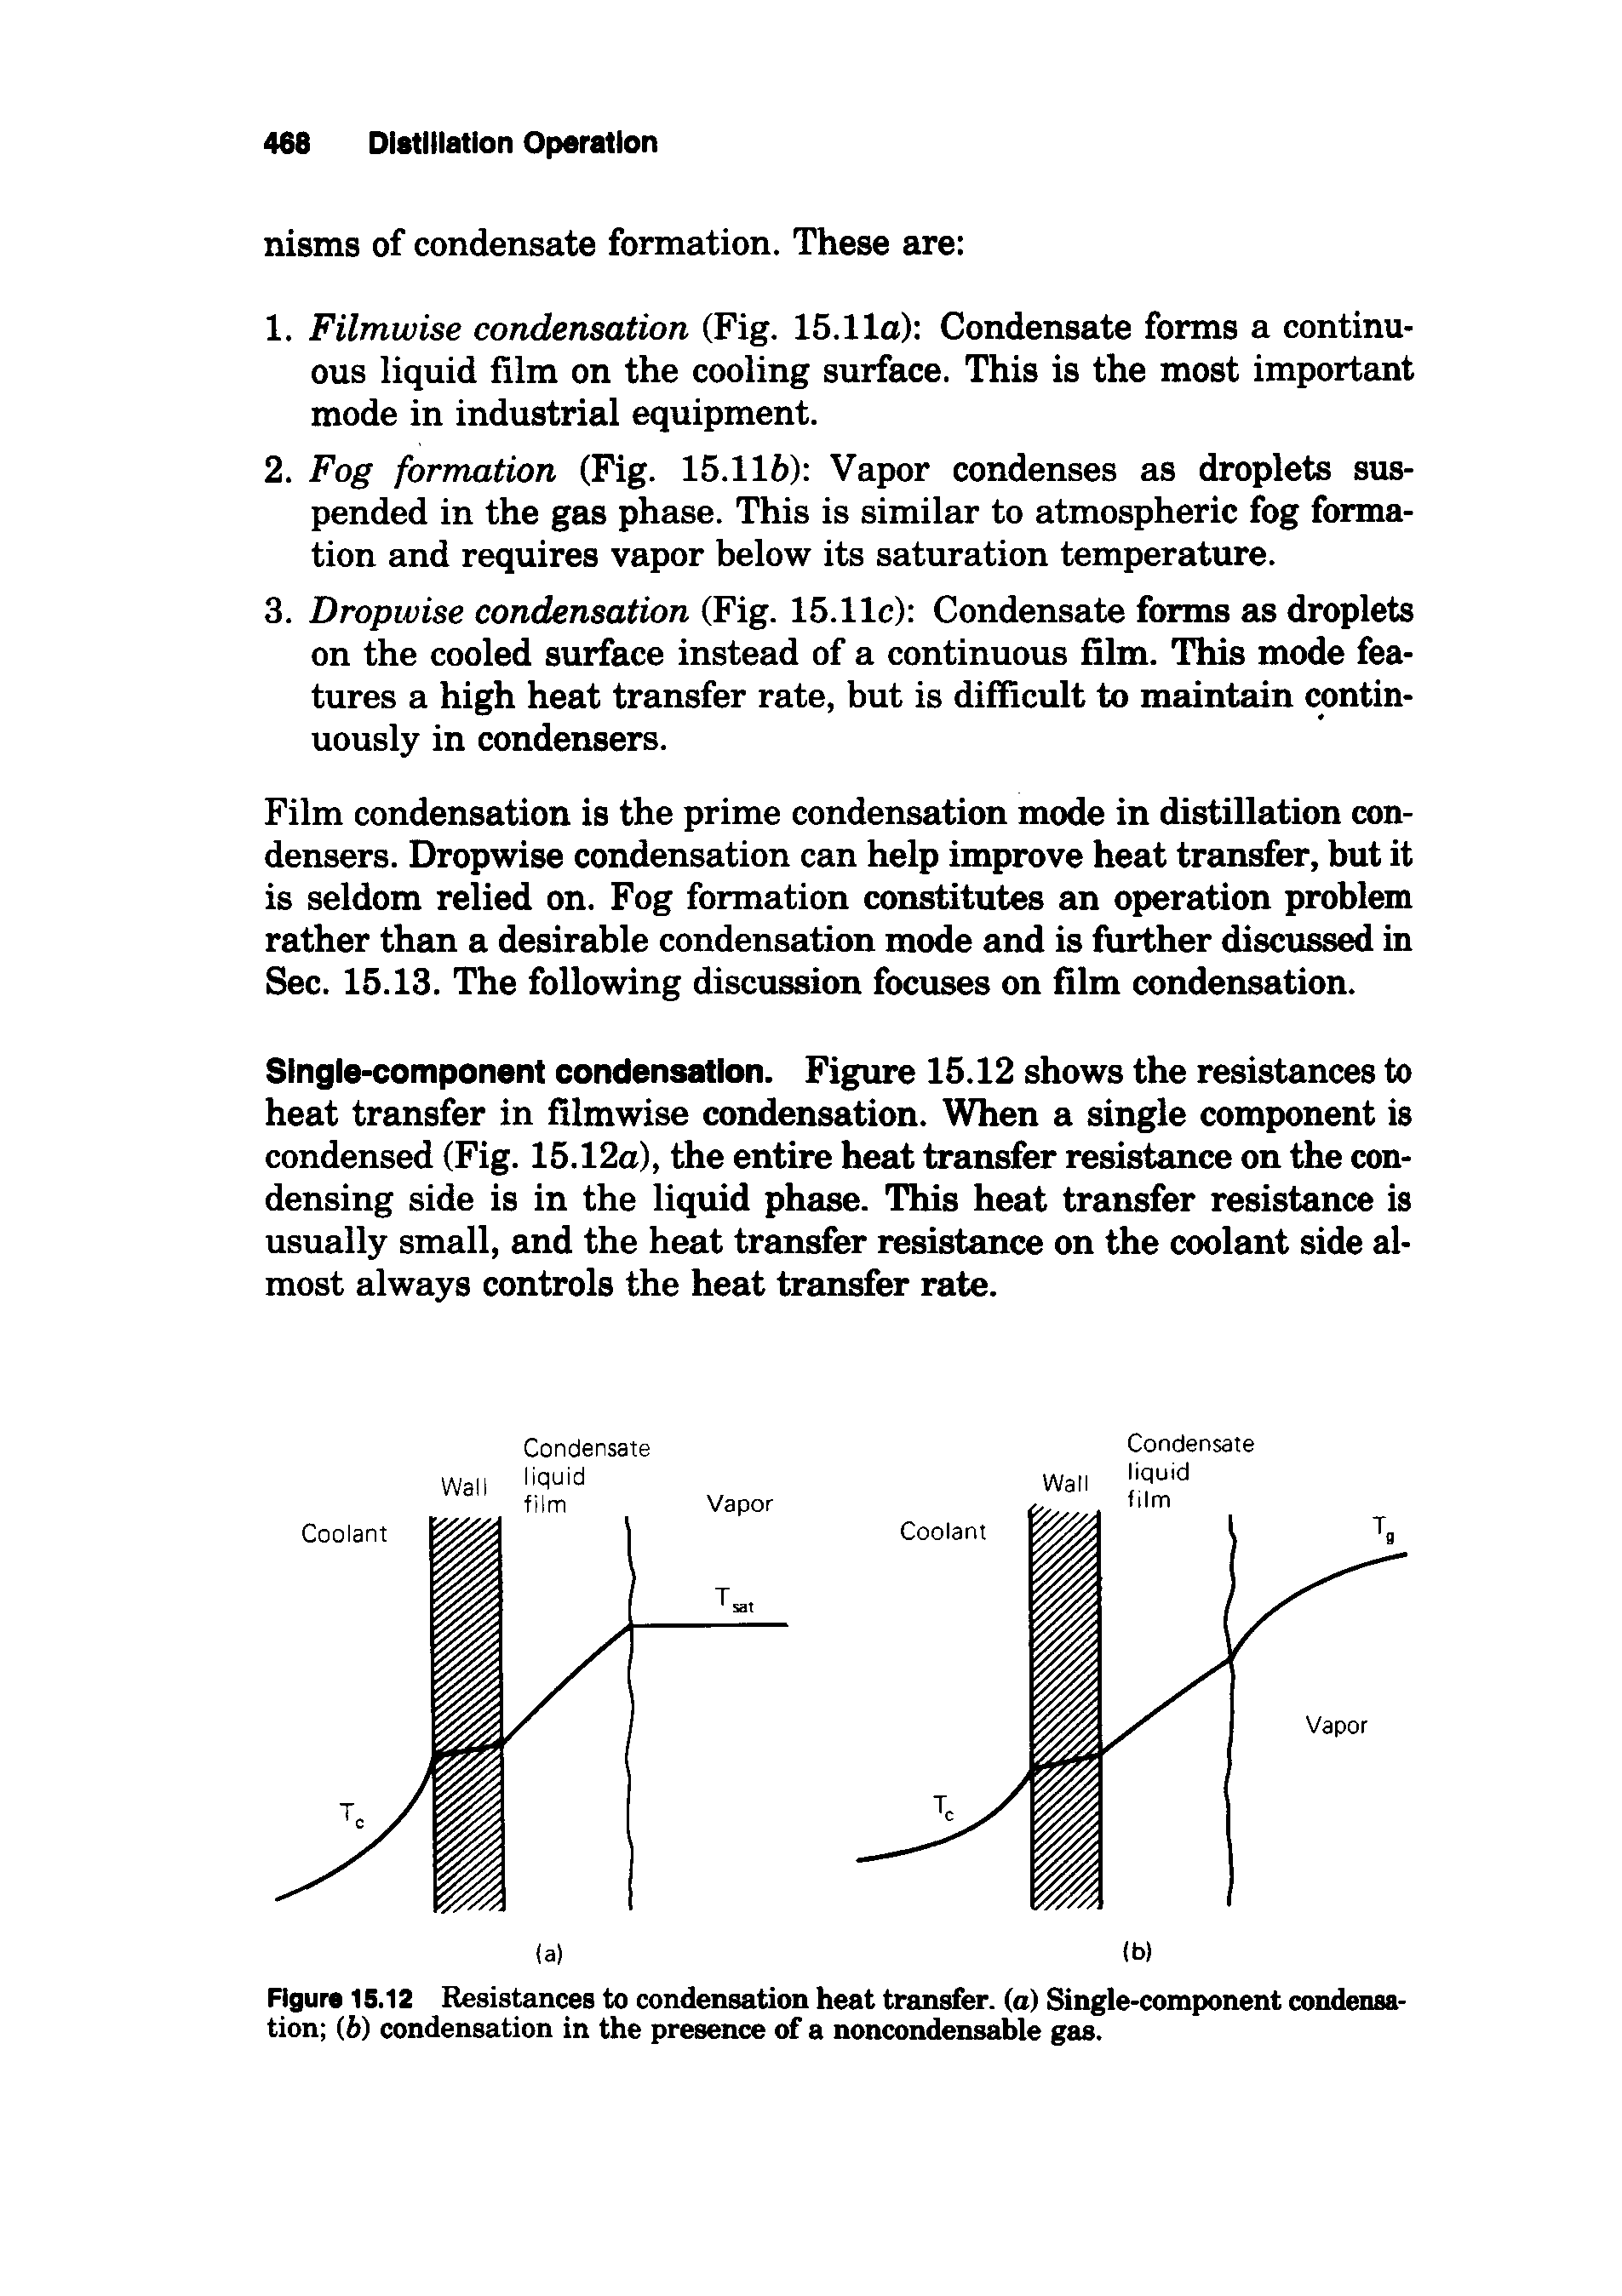 Figur 15.12 Resistances to condensation heat transfer, (a) Single-component condensation (b) condensation in the presence of a noncondensable gas.